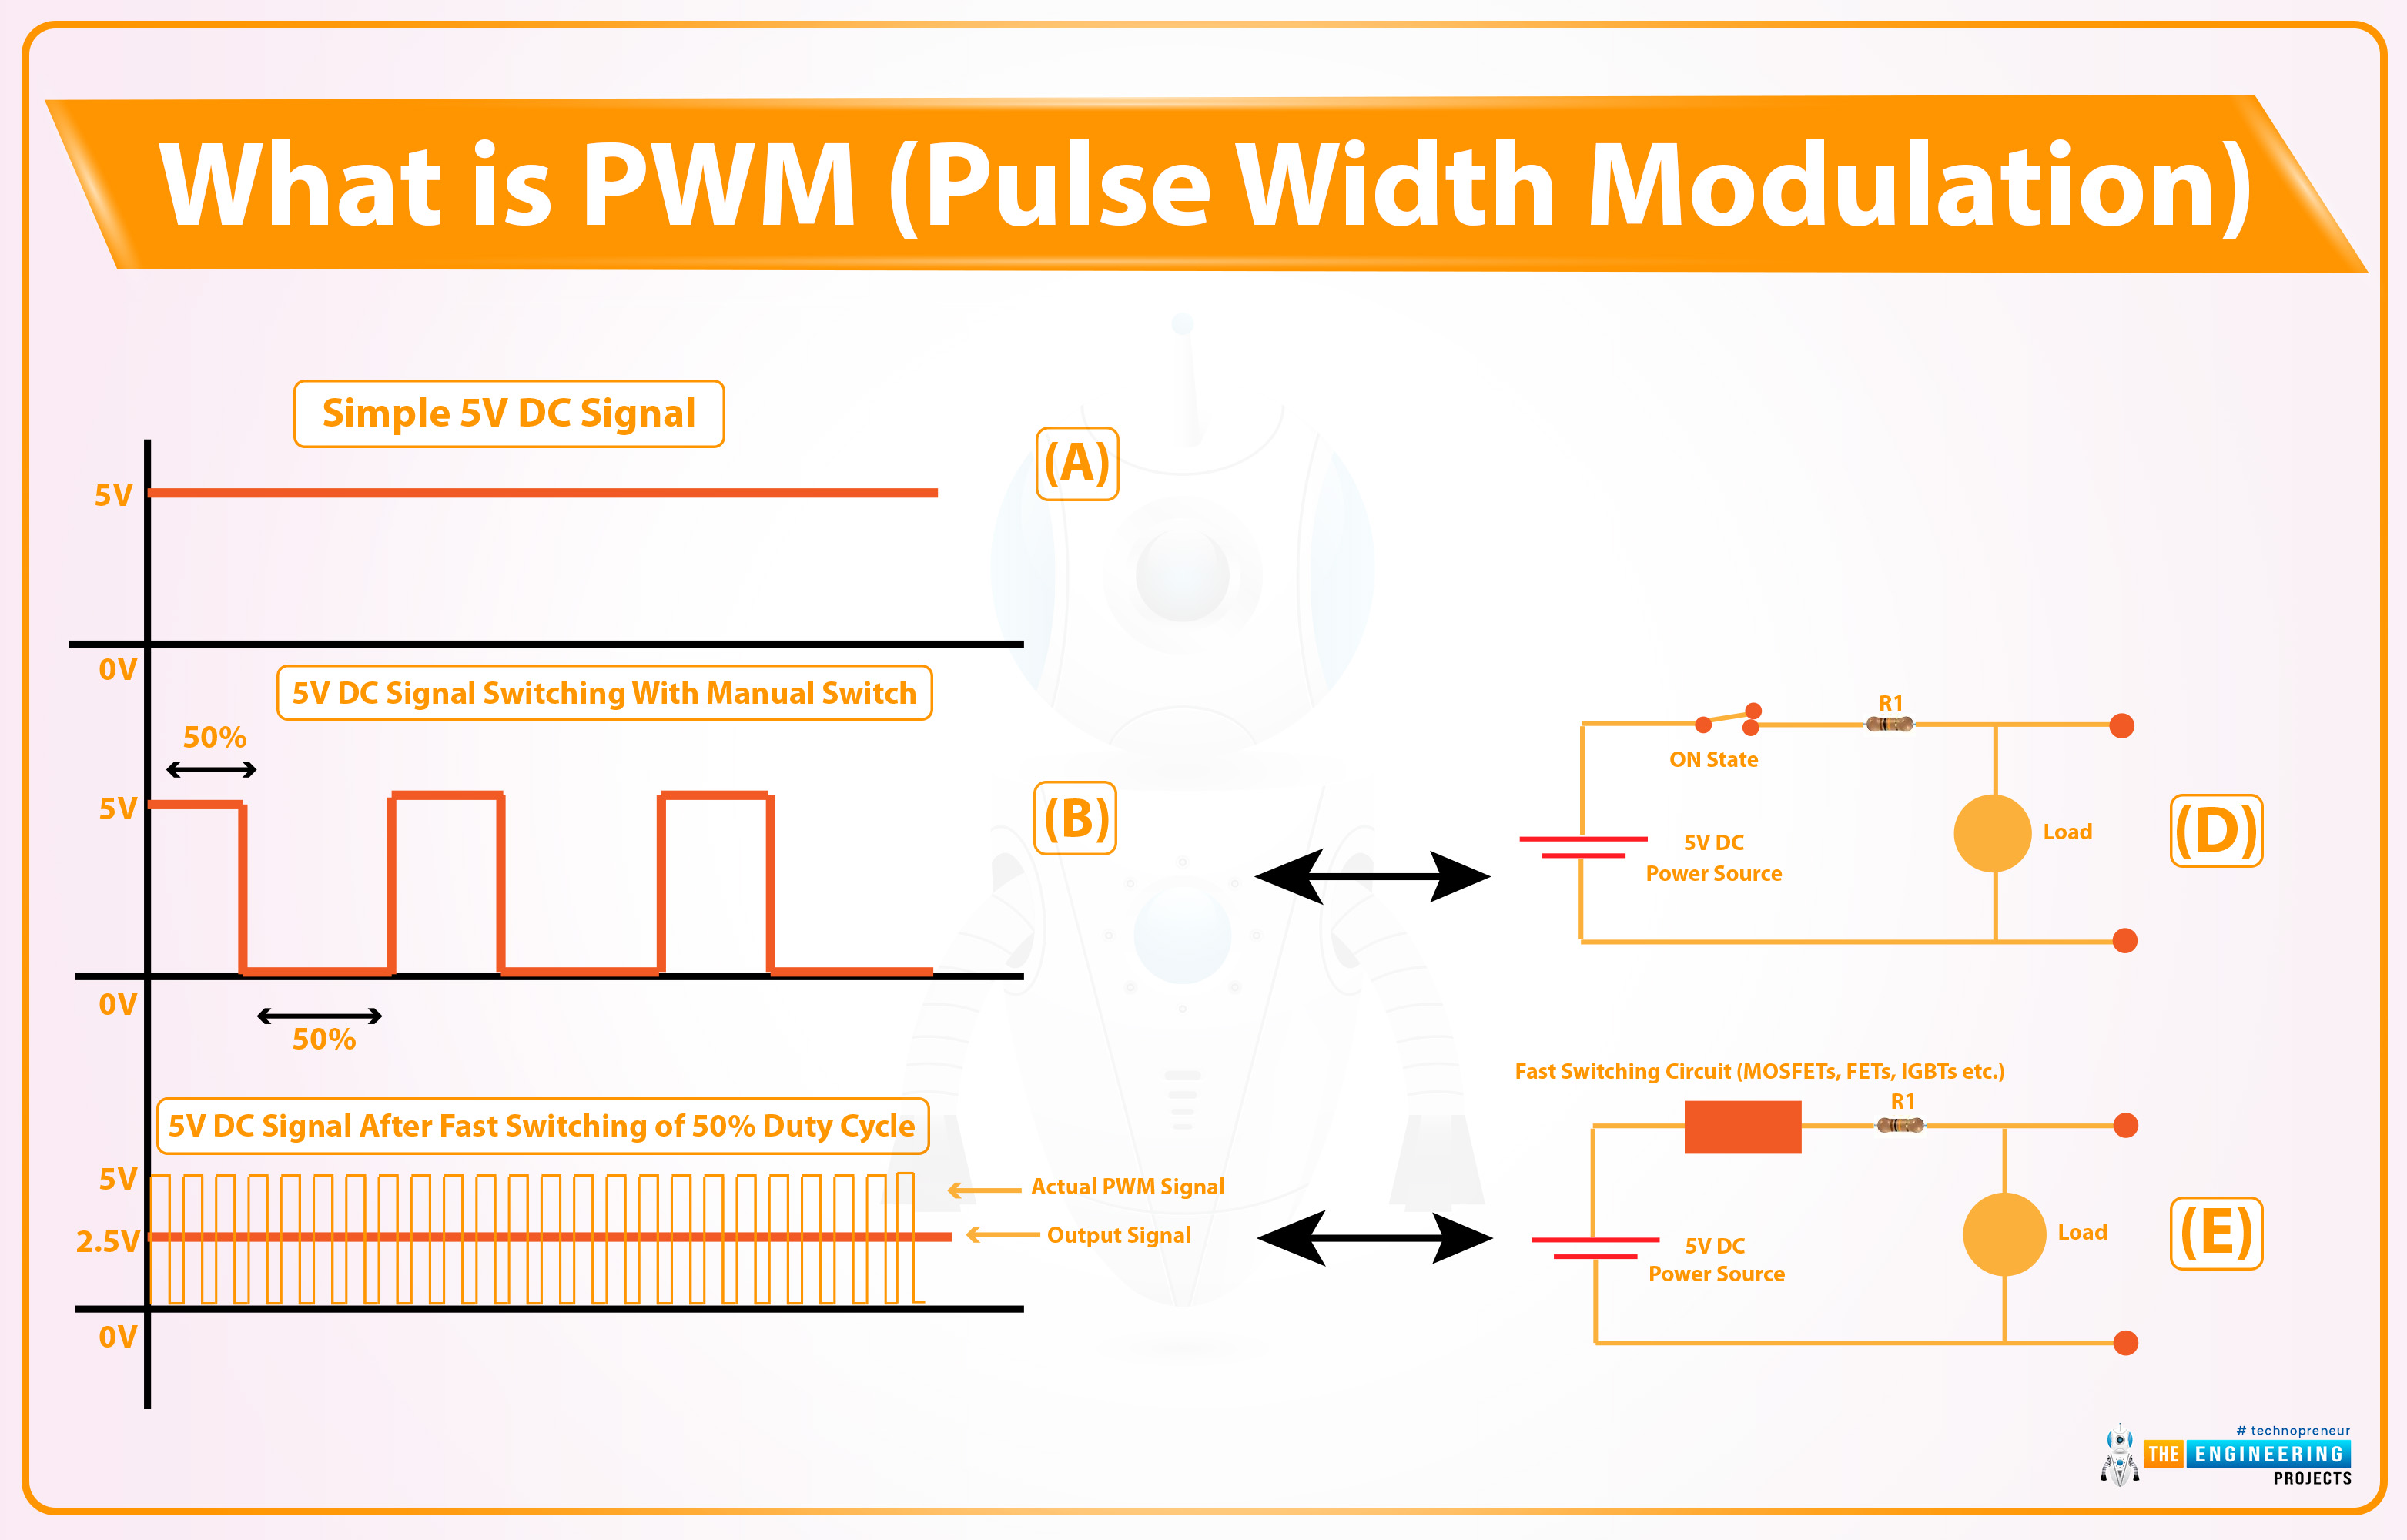 ESP32 PWM, PWM ESP32, PWM in ESP32, What is pulse width modulation, Implementing PWM using ESP32, ESP32 Arduino code for controlling LED brightness using PWM, PWM specifications, PWM ESP32 motor control, ESP32 PWM led brightness control